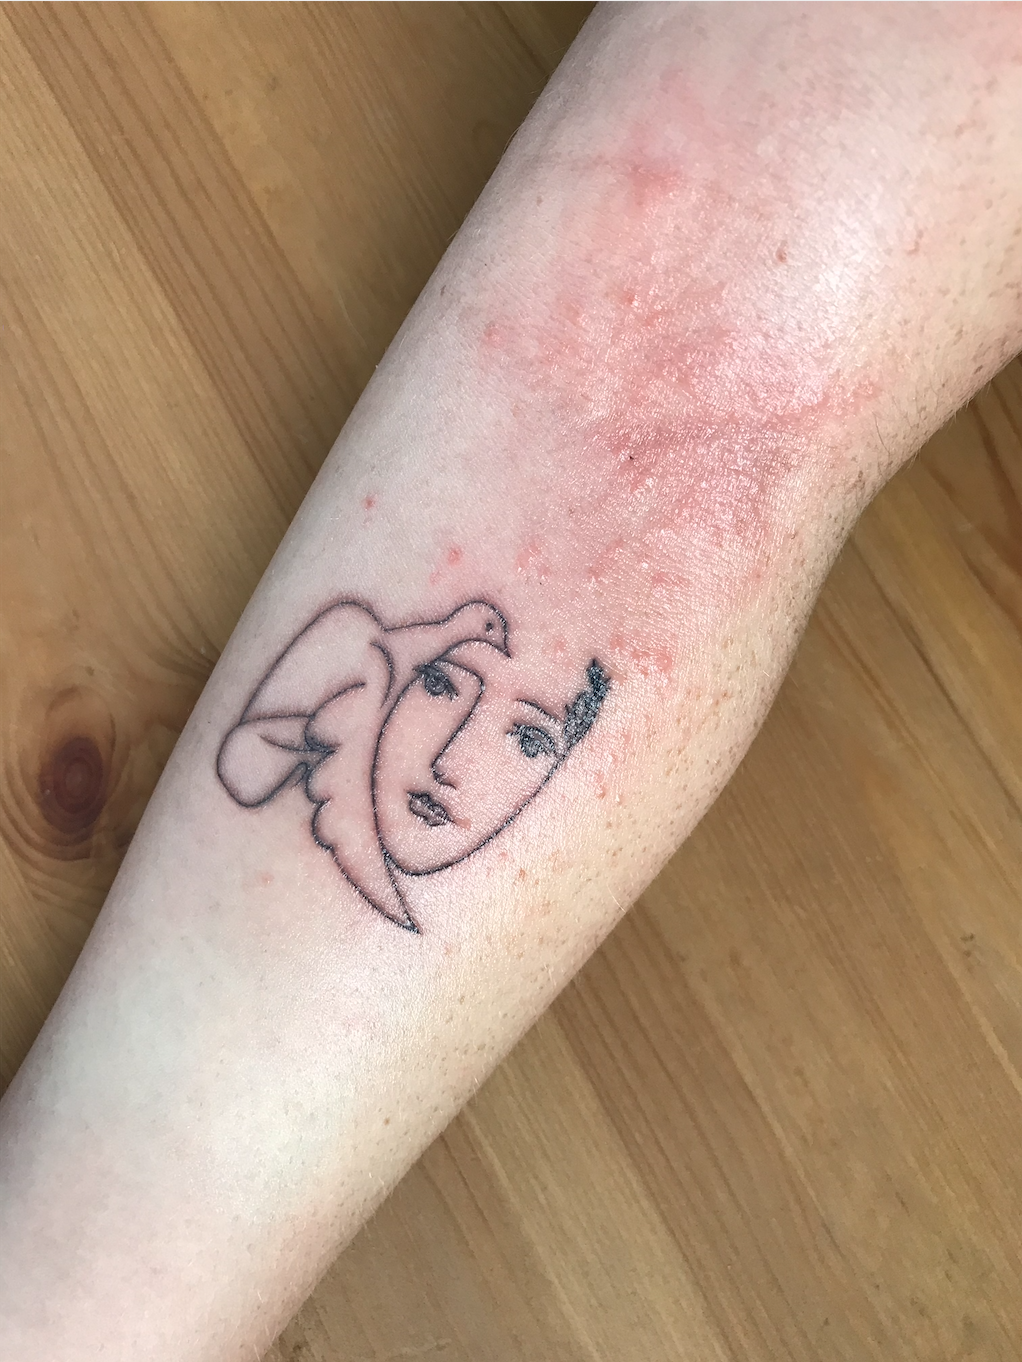 Red Scaly Rash Following Tattoo Application  MDedge Dermatology